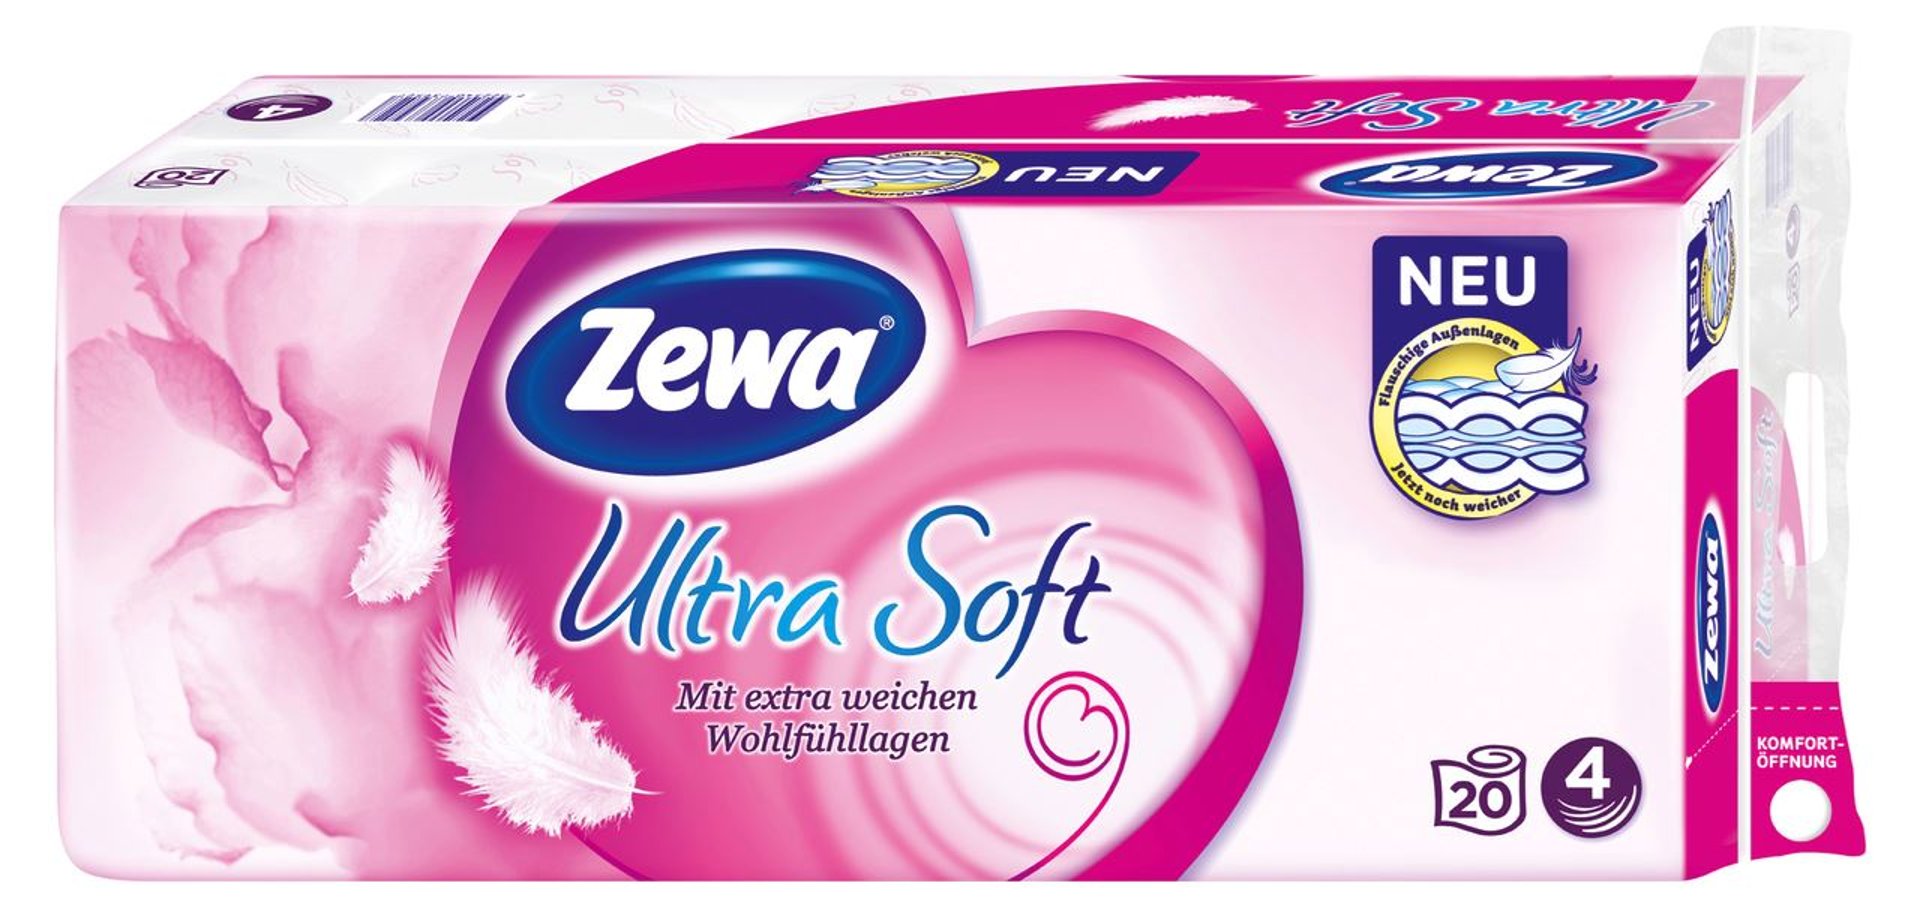 Zewa Ultra Soft Toilettenpapier 20 x 150 Blatt Weiß Zellstoff 4 lagig